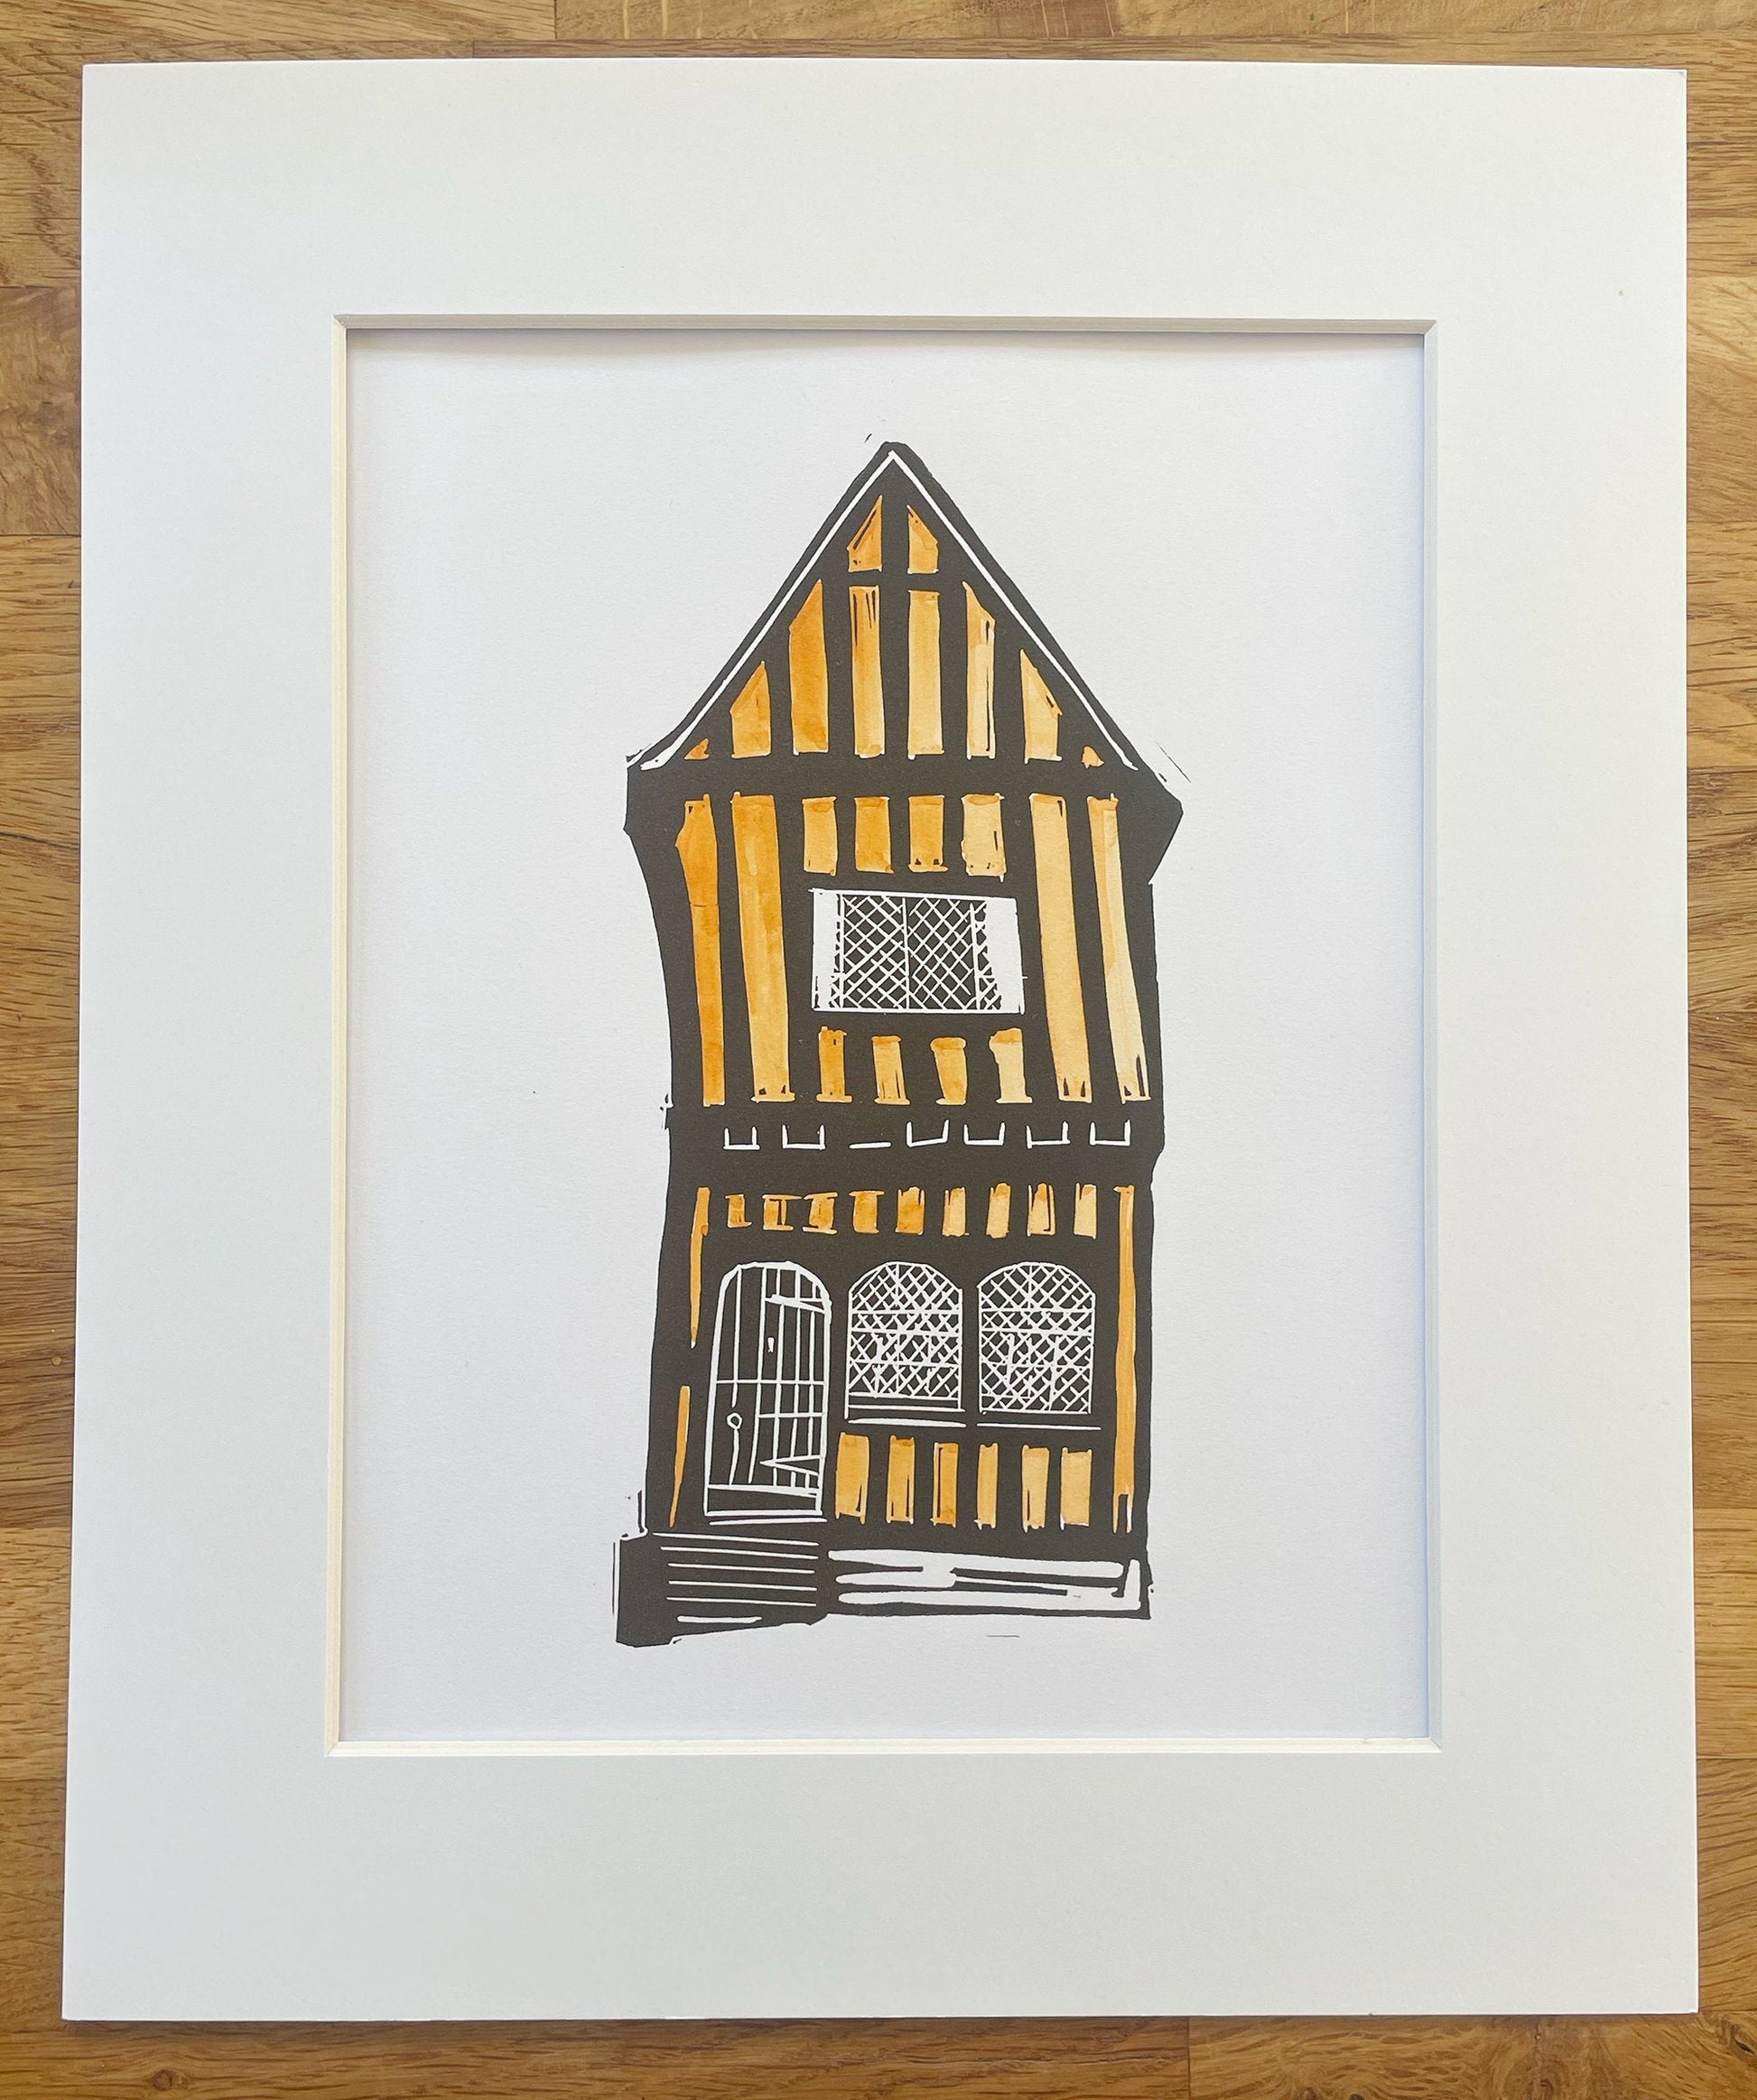 The Crooked House, Lavenham. Limited Edition Linocut Print by The Rik Barwick Studio